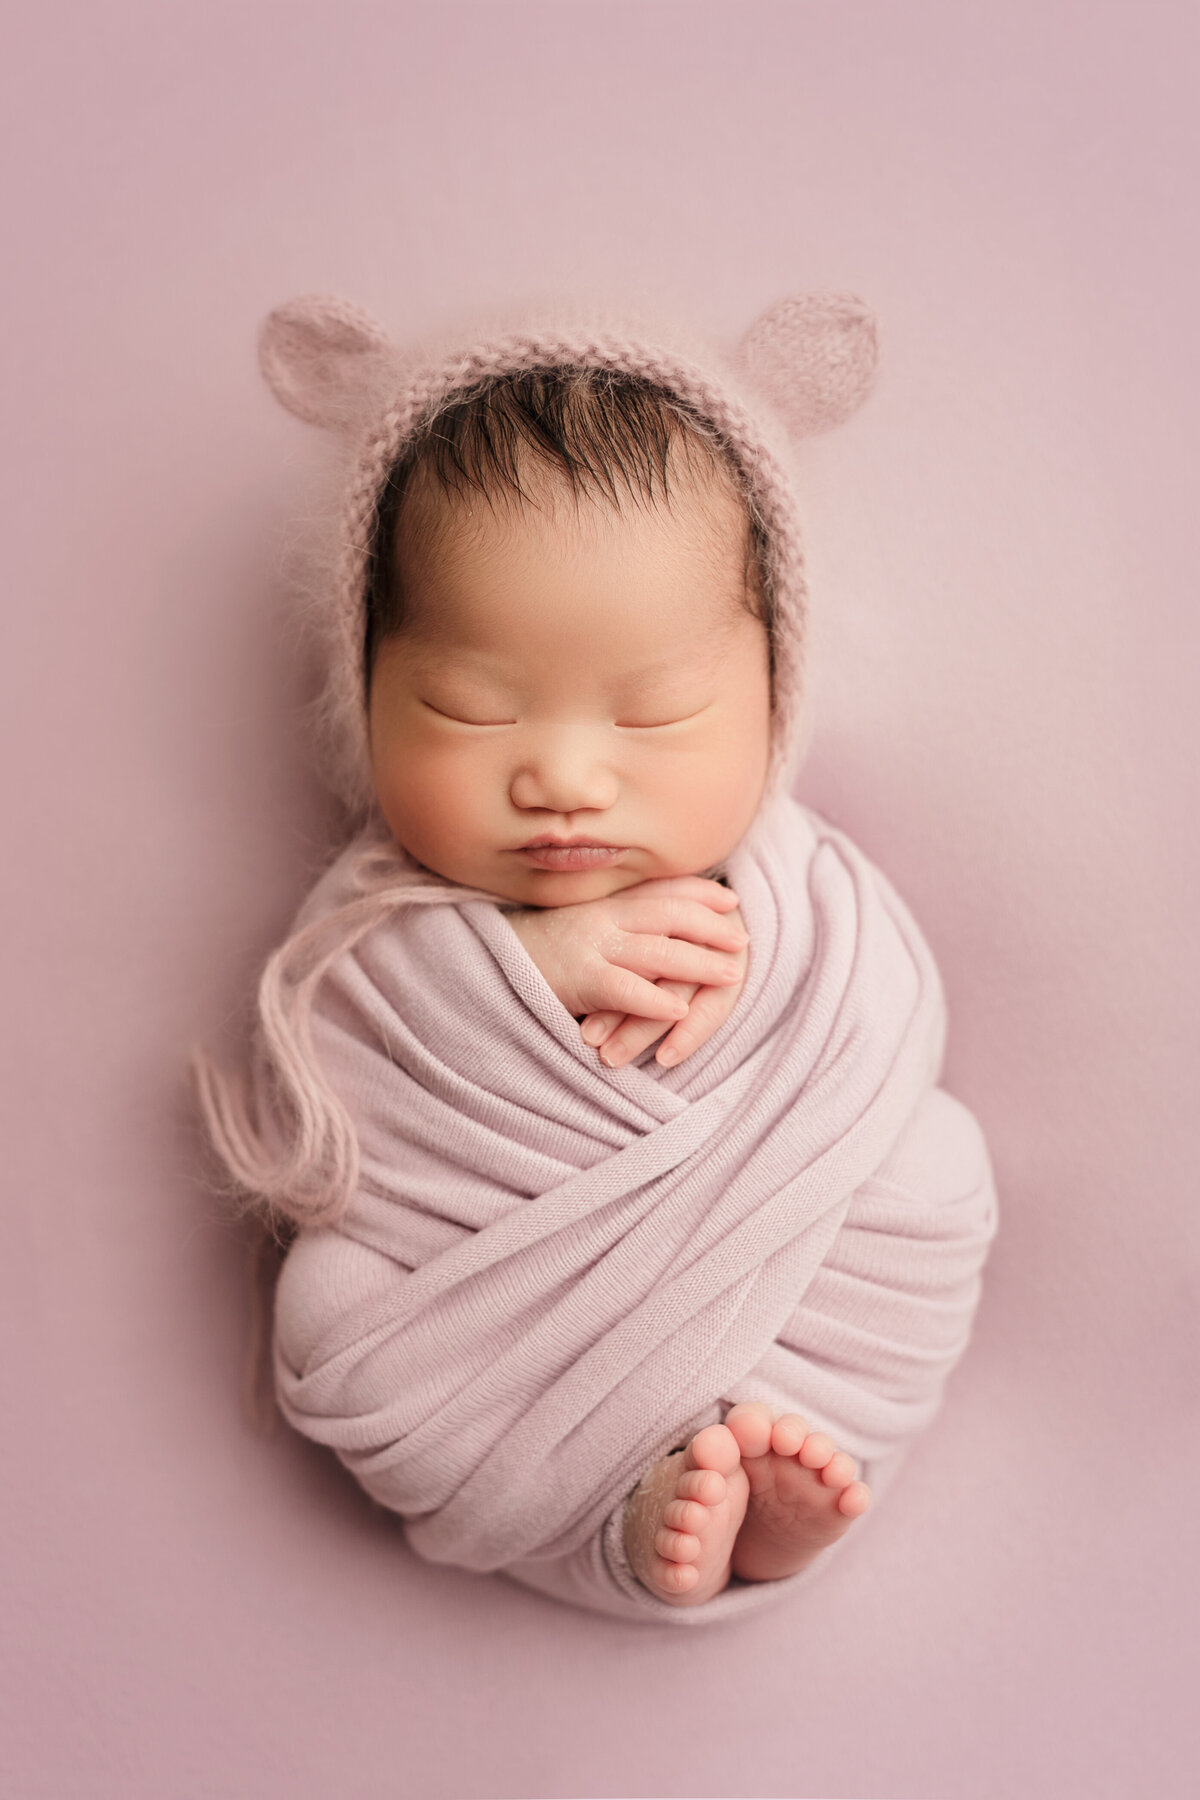 newborn baby girl on lavendar blanket with a  bear hat on